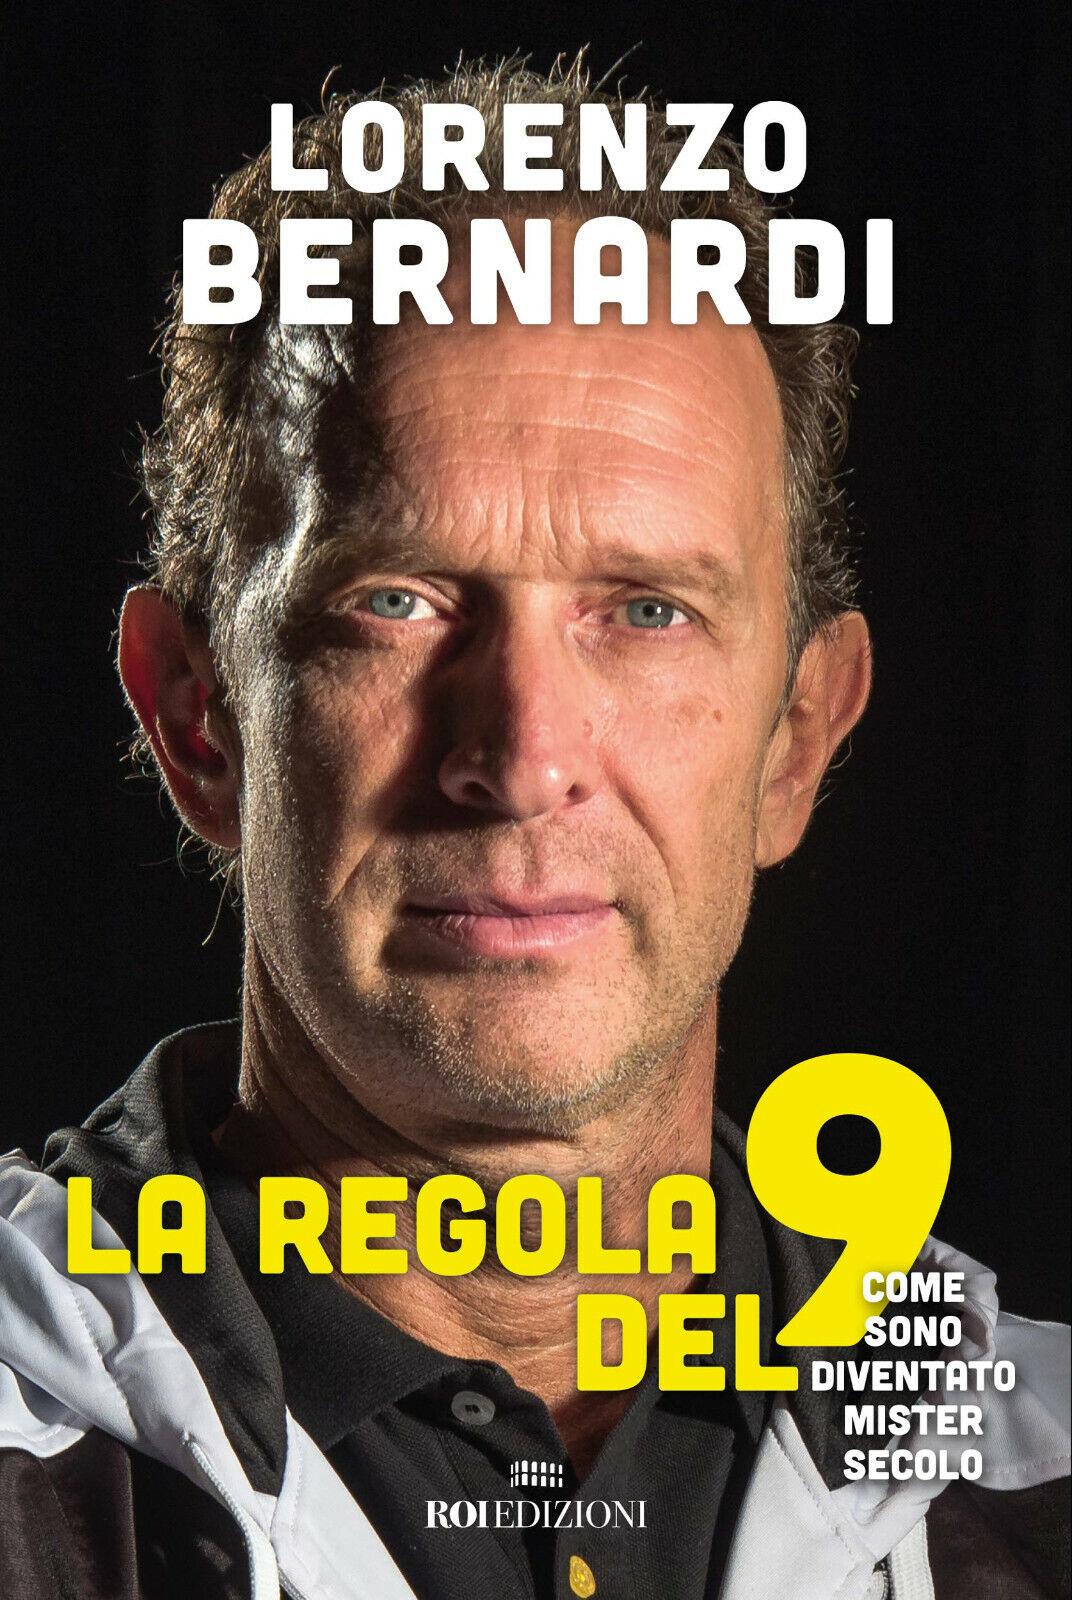 La regola del 9 - Lorenzo Bernardi - Roi edizioni, 2019